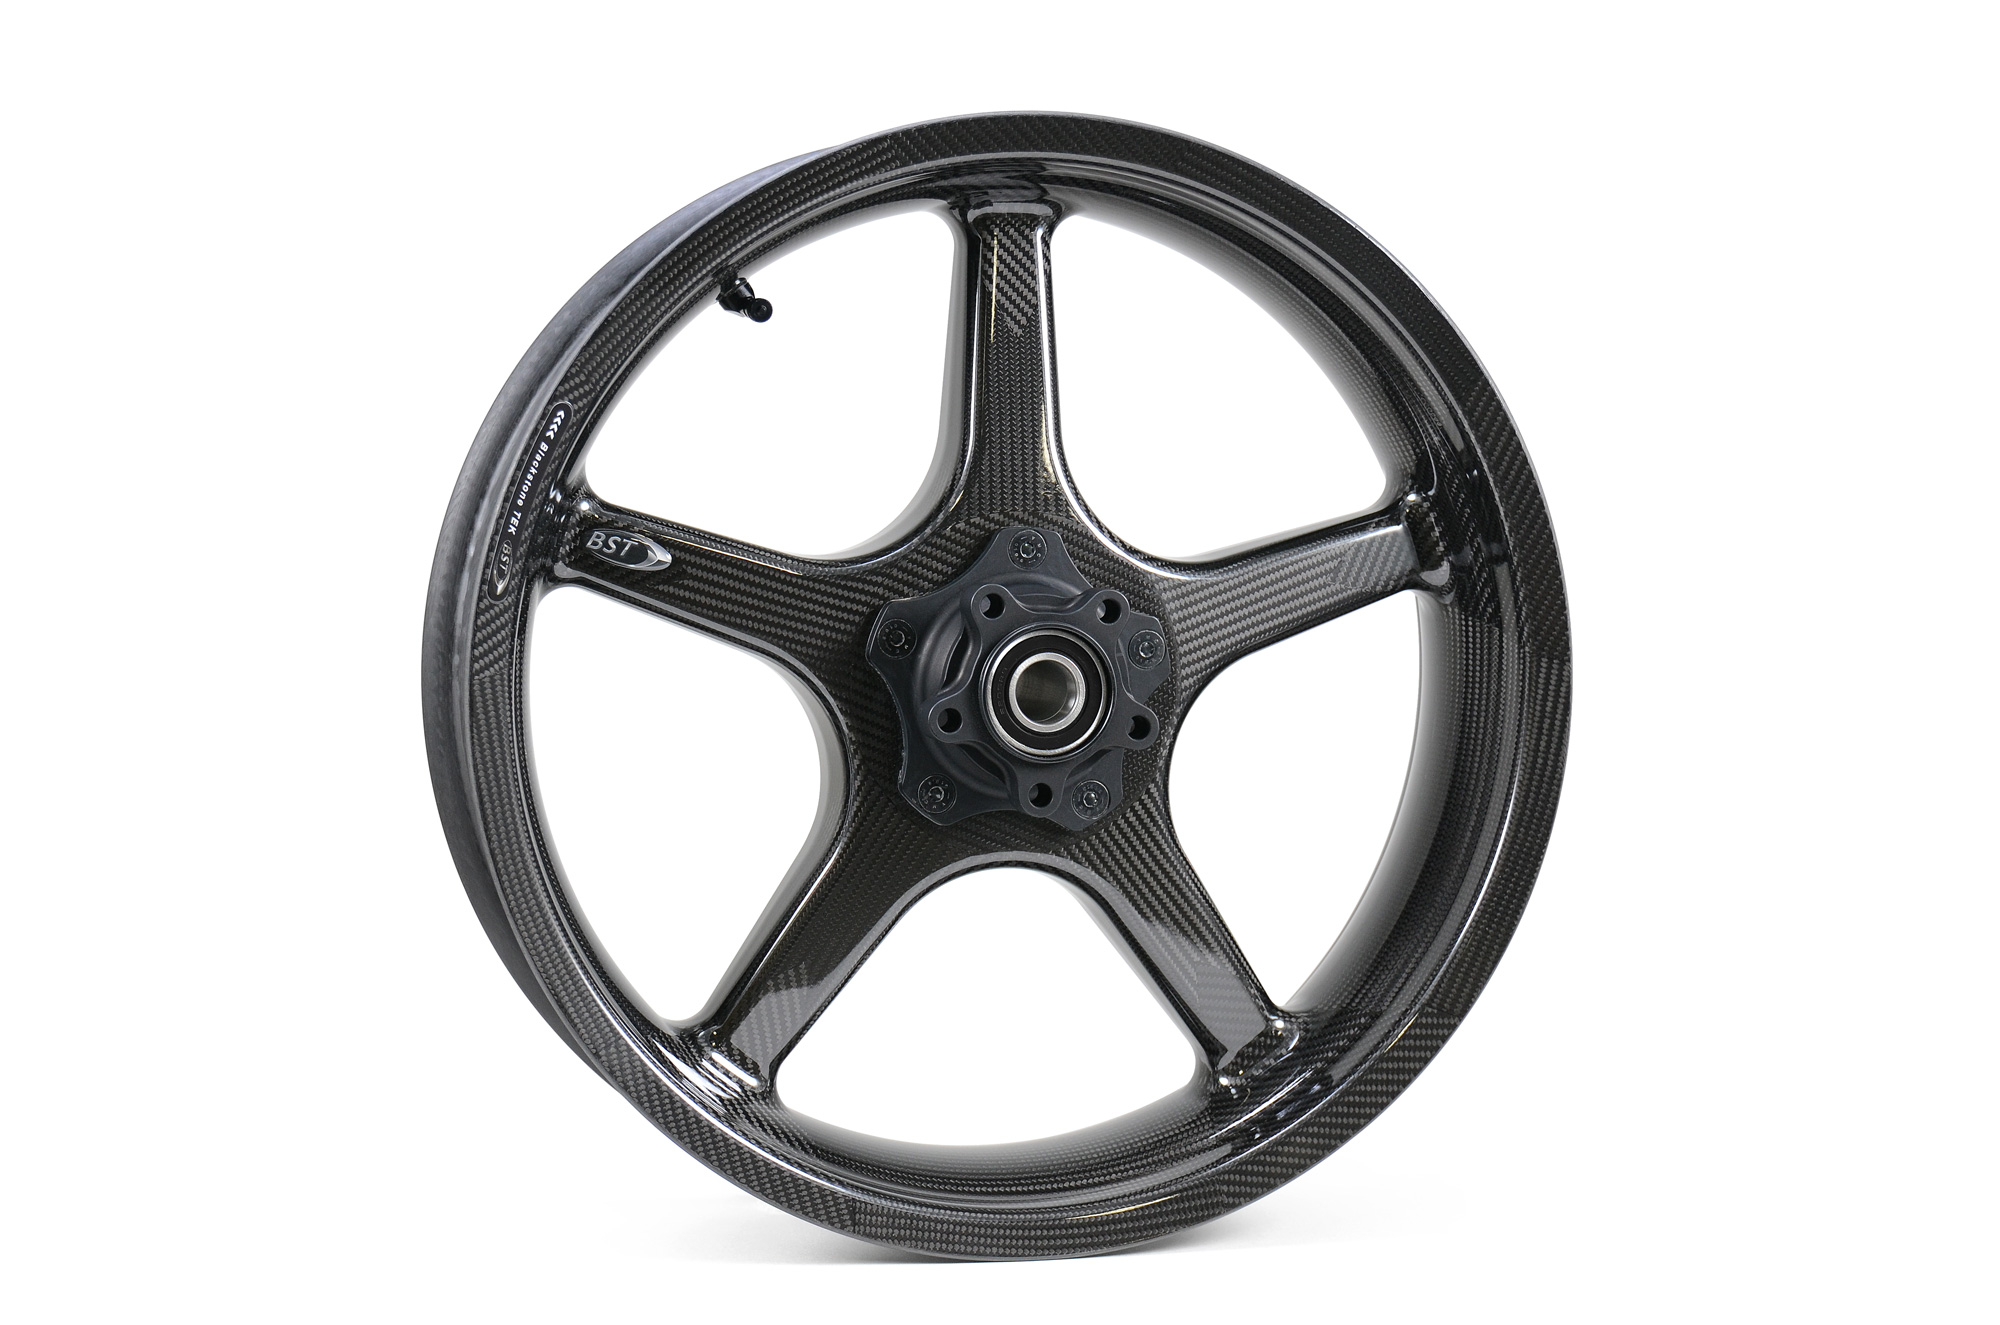 Buy BST Twin TEK 17 x 5.5 Rear Wheel - Indian FTR 1200 (19-20) SKU: 172159 at the price of US$ 2545 | BrocksPerformance.com